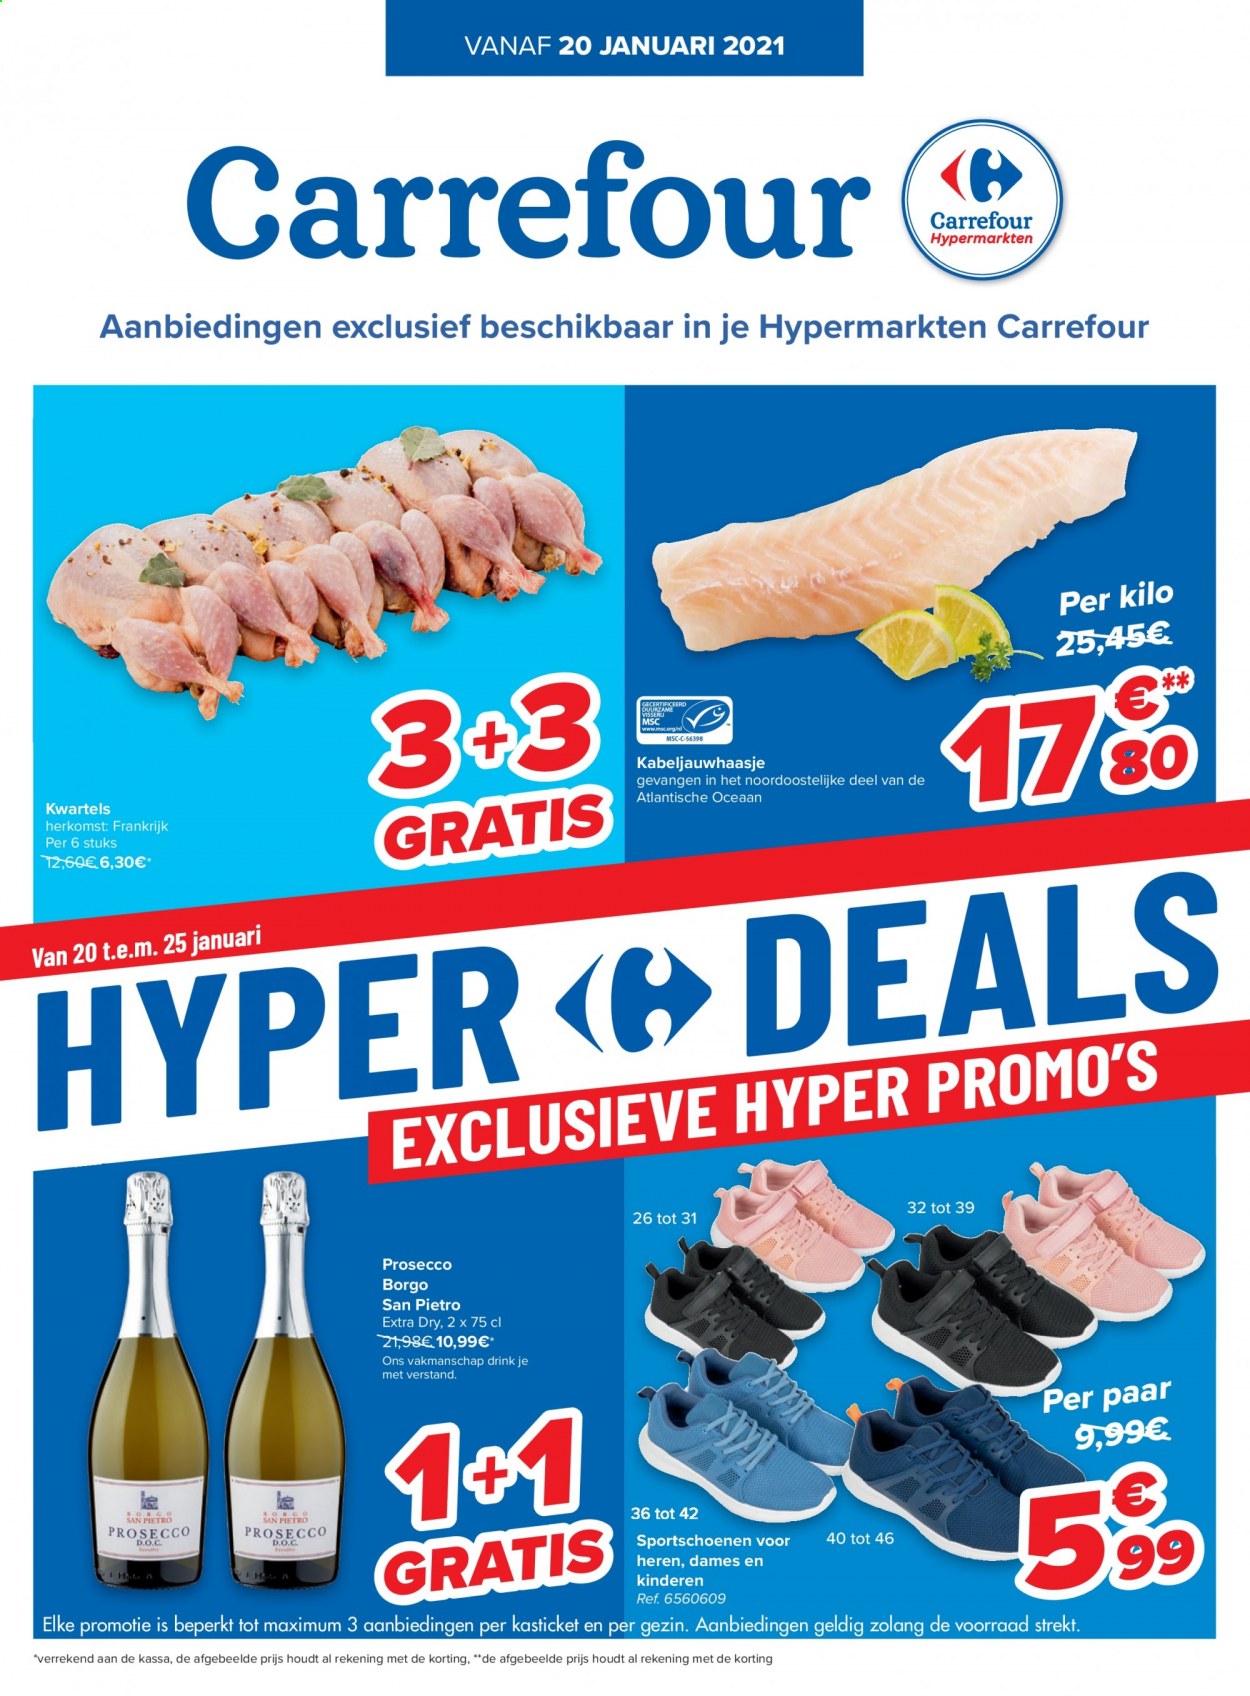 thumbnail - Carrefour hypermarkt-aanbieding -  producten in de aanbieding - sportschoenen, prosecco. Pagina 1.